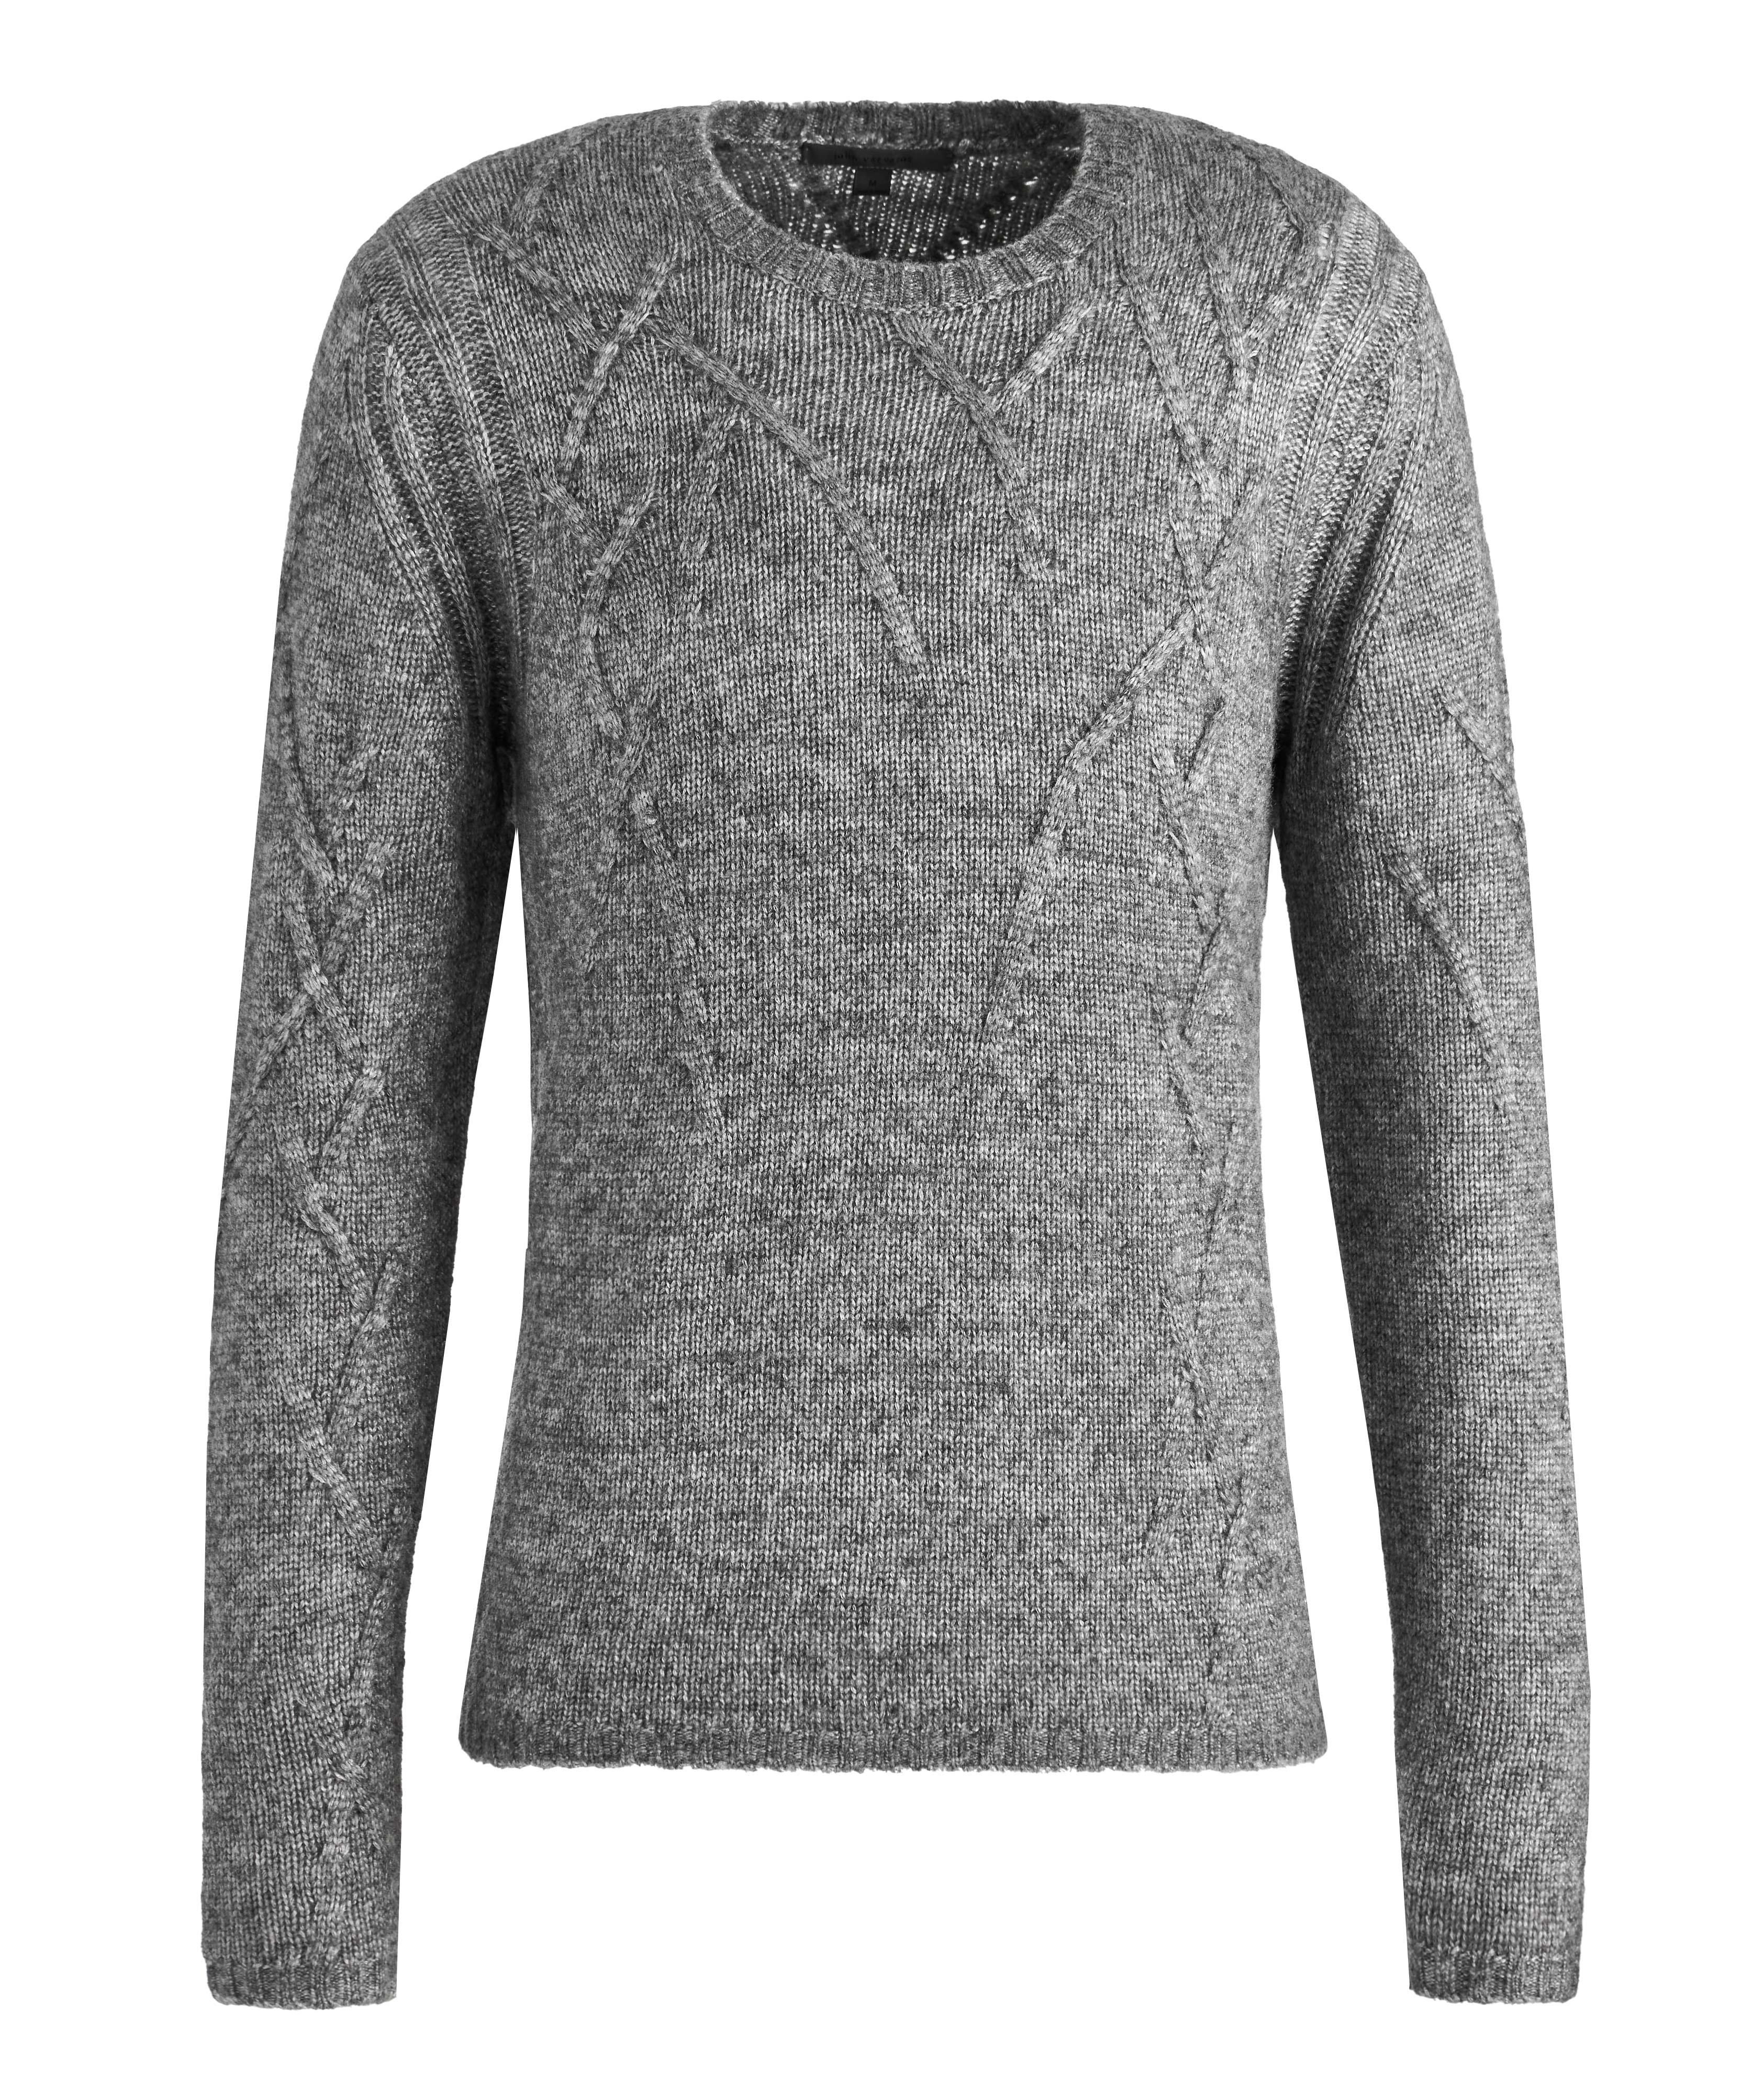 Nolans Wool-Blend Crew Neck Sweater image 0